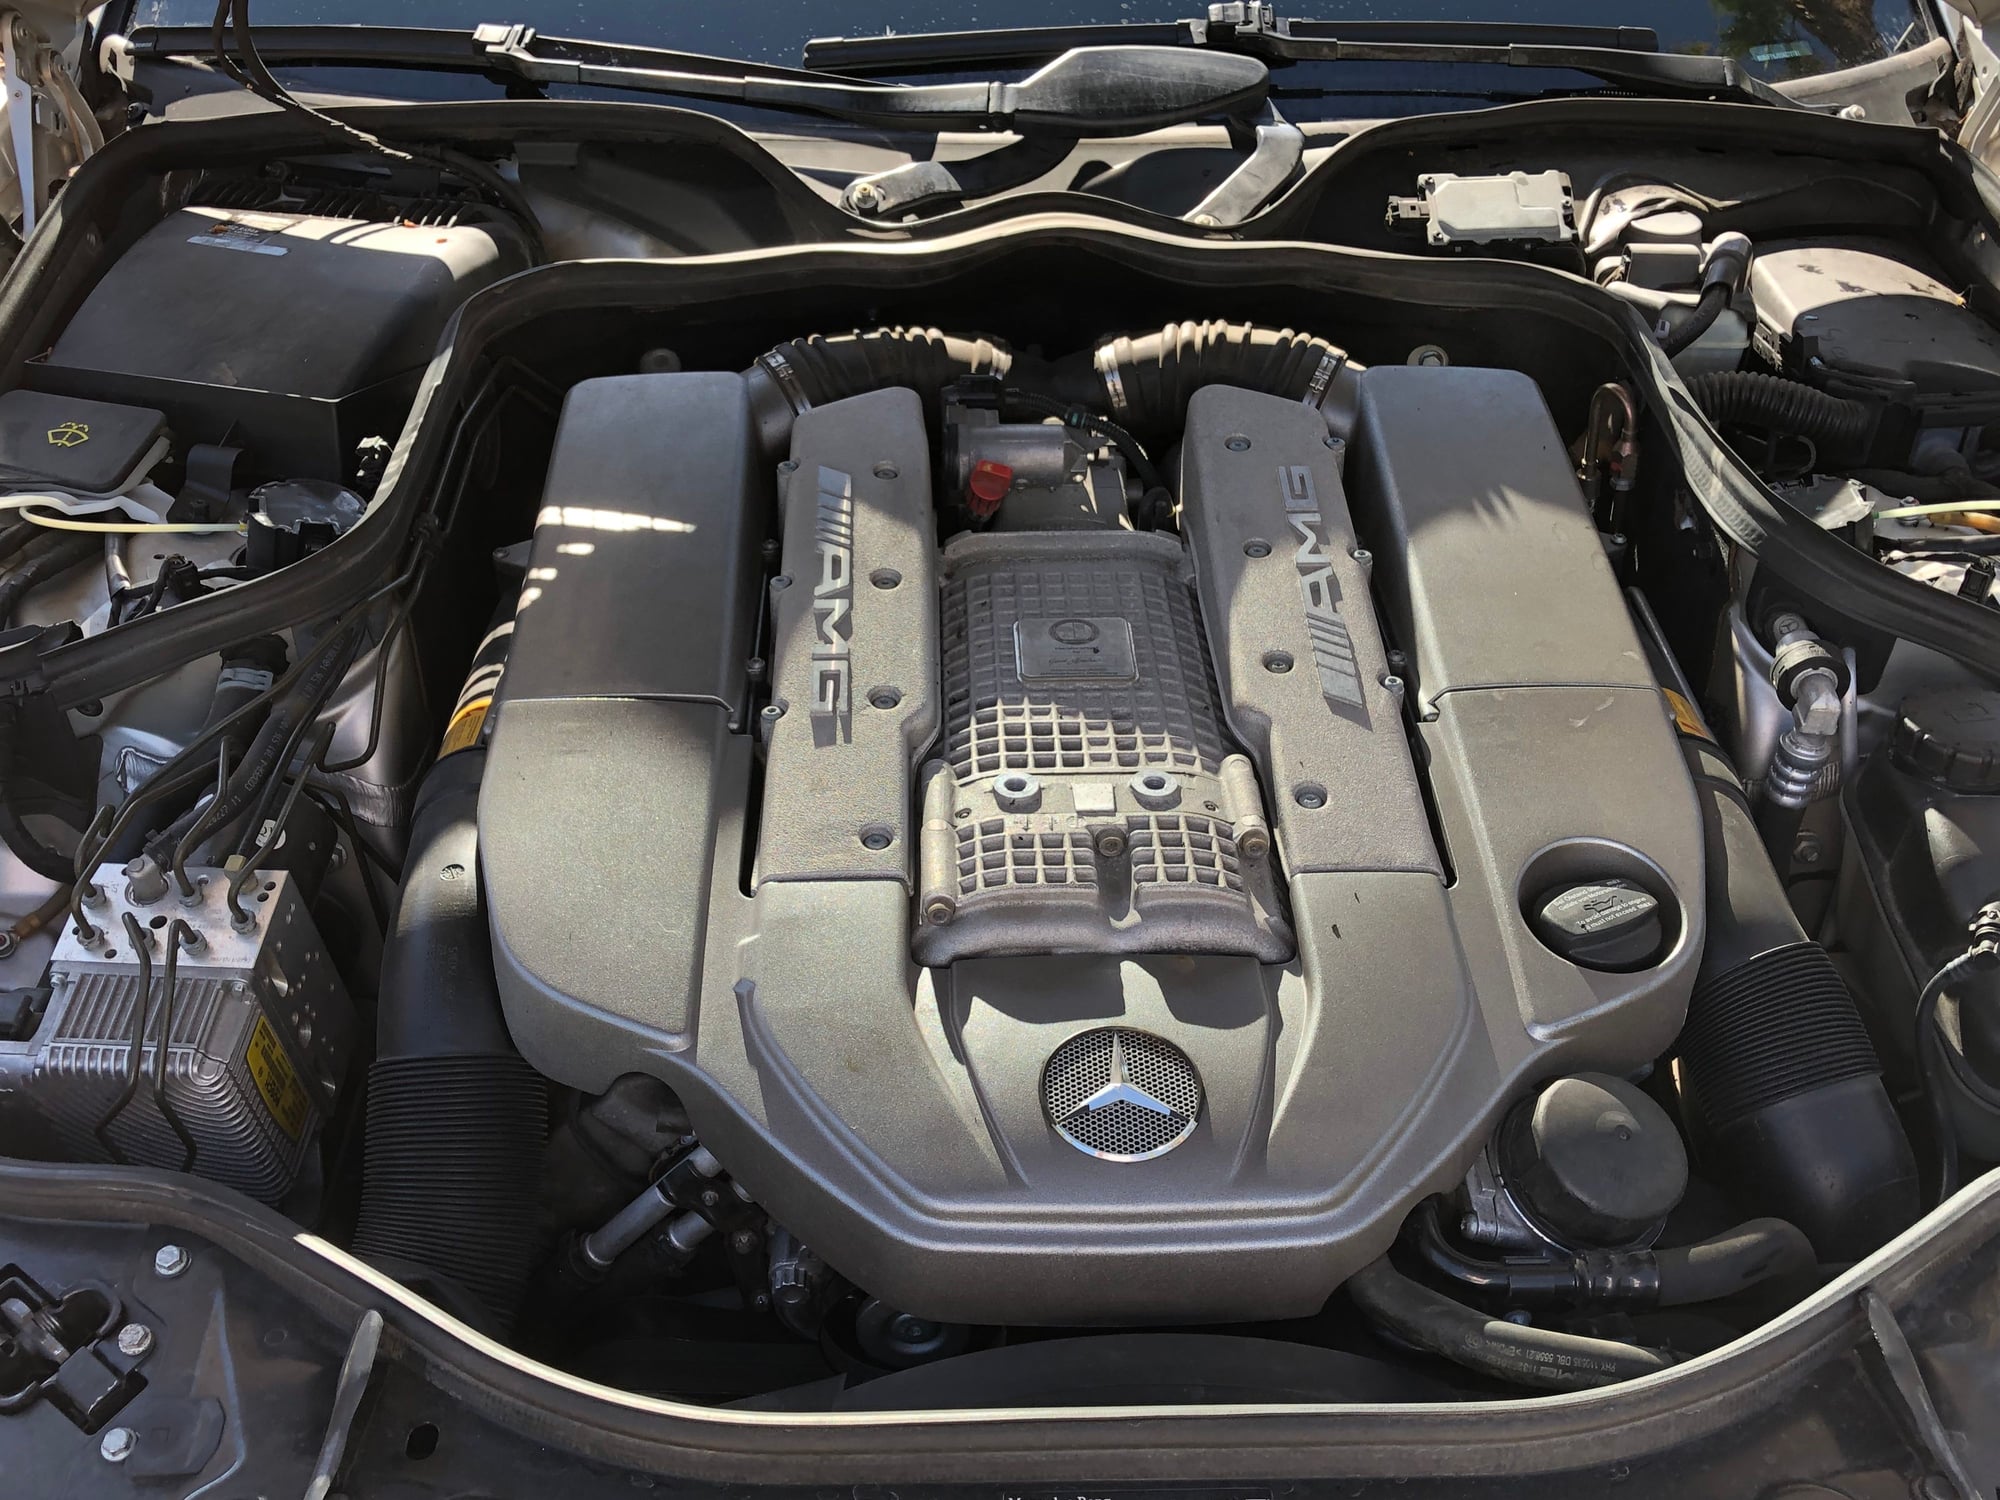 2004 Mercedes-Benz E55 AMG - E55, 52k Miles, Silver with a Black Interior - Used - VIN Wdbuf76j03a27278 - 53,000 Miles - Sedan - Silver - Tucson, AZ 85719, United States